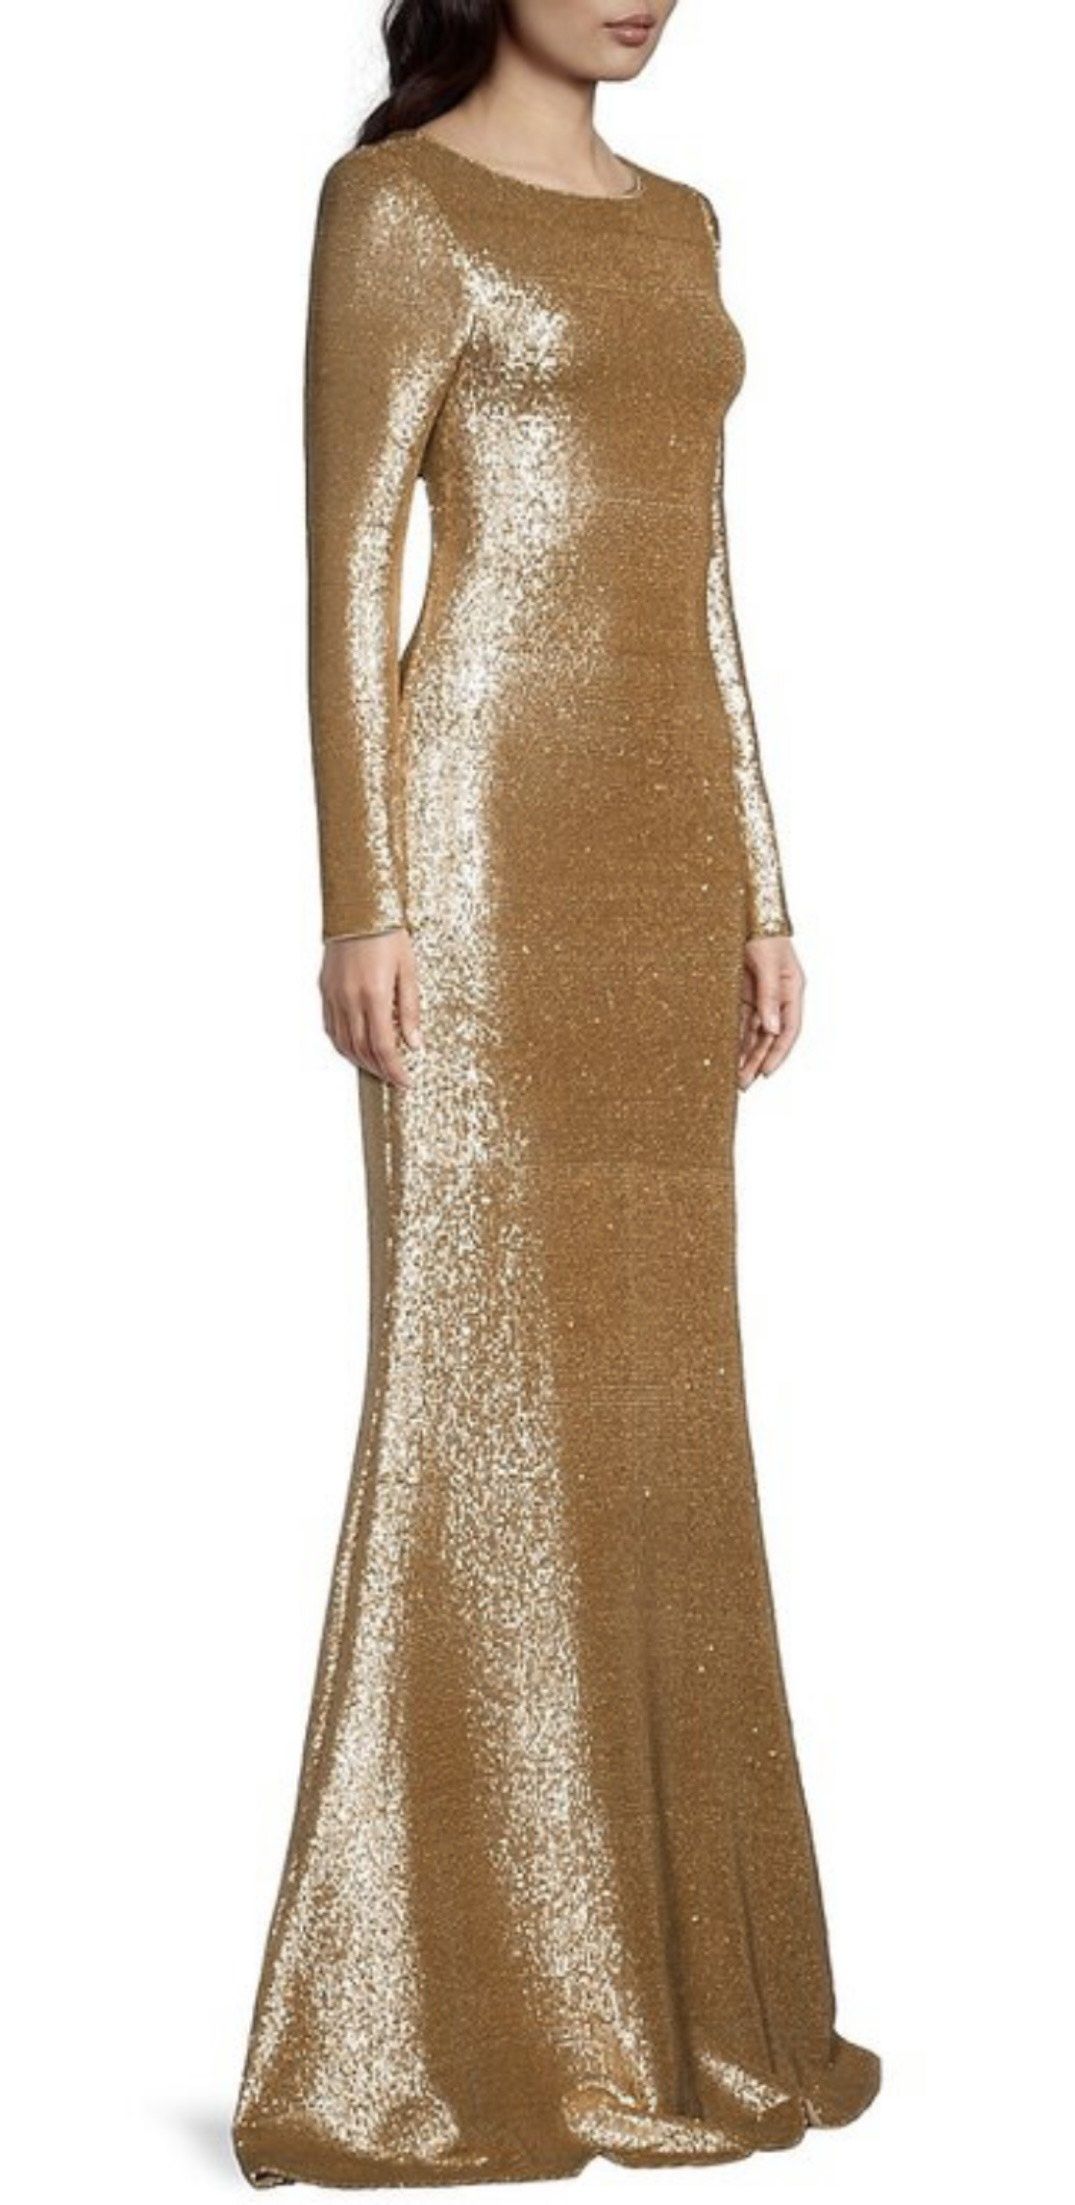 Donna Karan New York Size 10 Bridesmaid Gold Mermaid Dress on Queenly